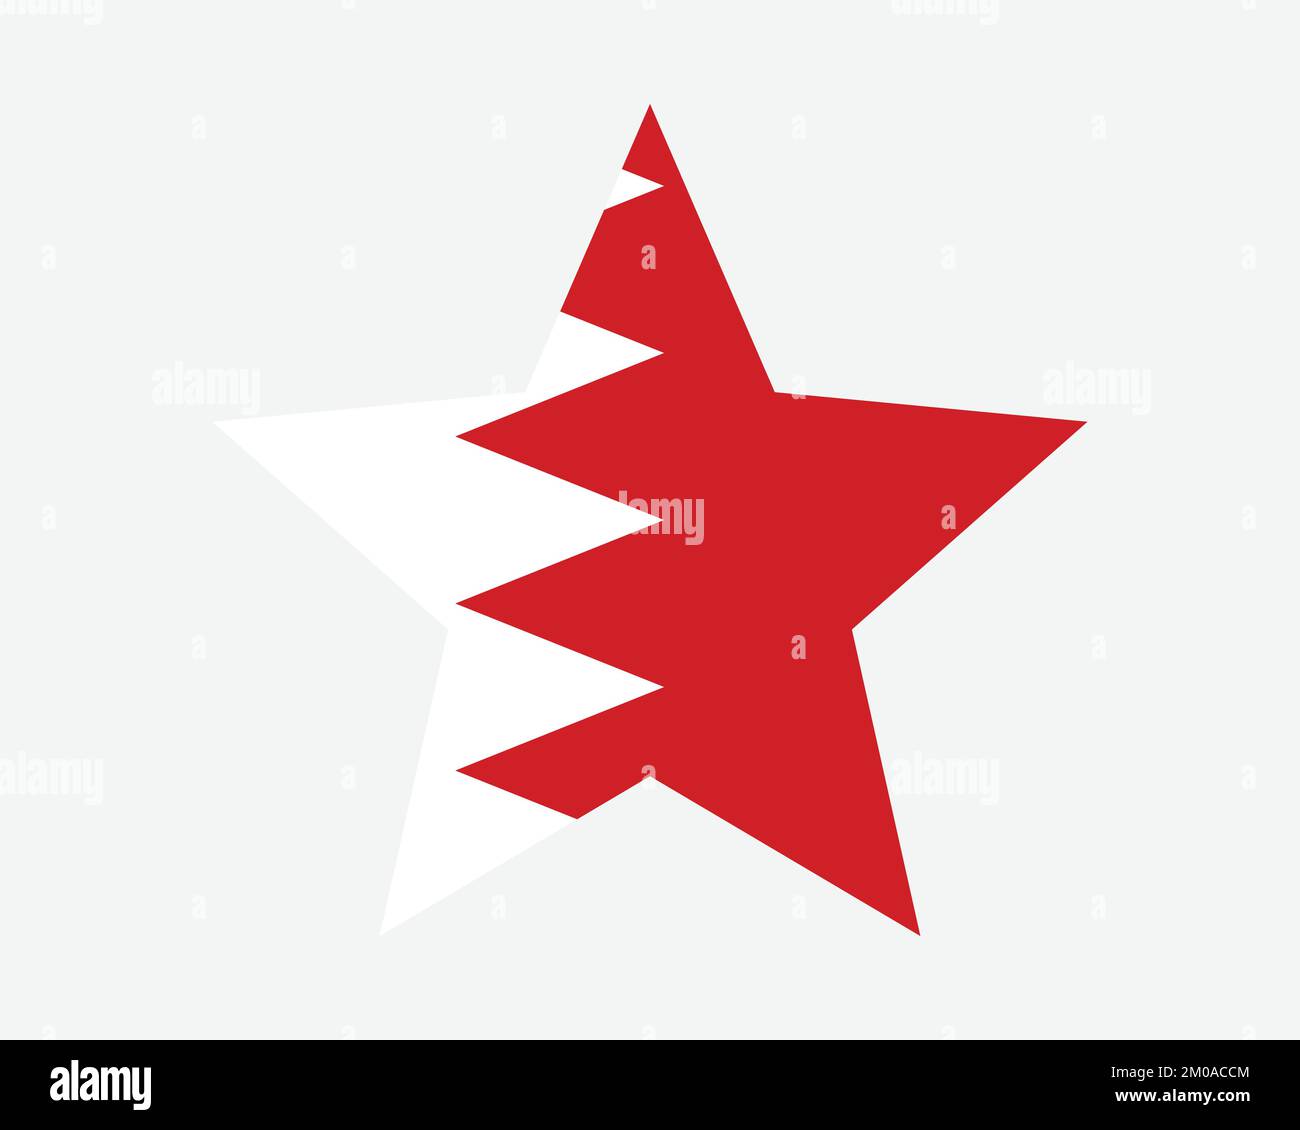 Bahrain Star Flag. Bahraini Star Shape Flag. Country National Banner Icon Symbol Vector 2D Flat Artwork Graphic Illustration Stock Vector